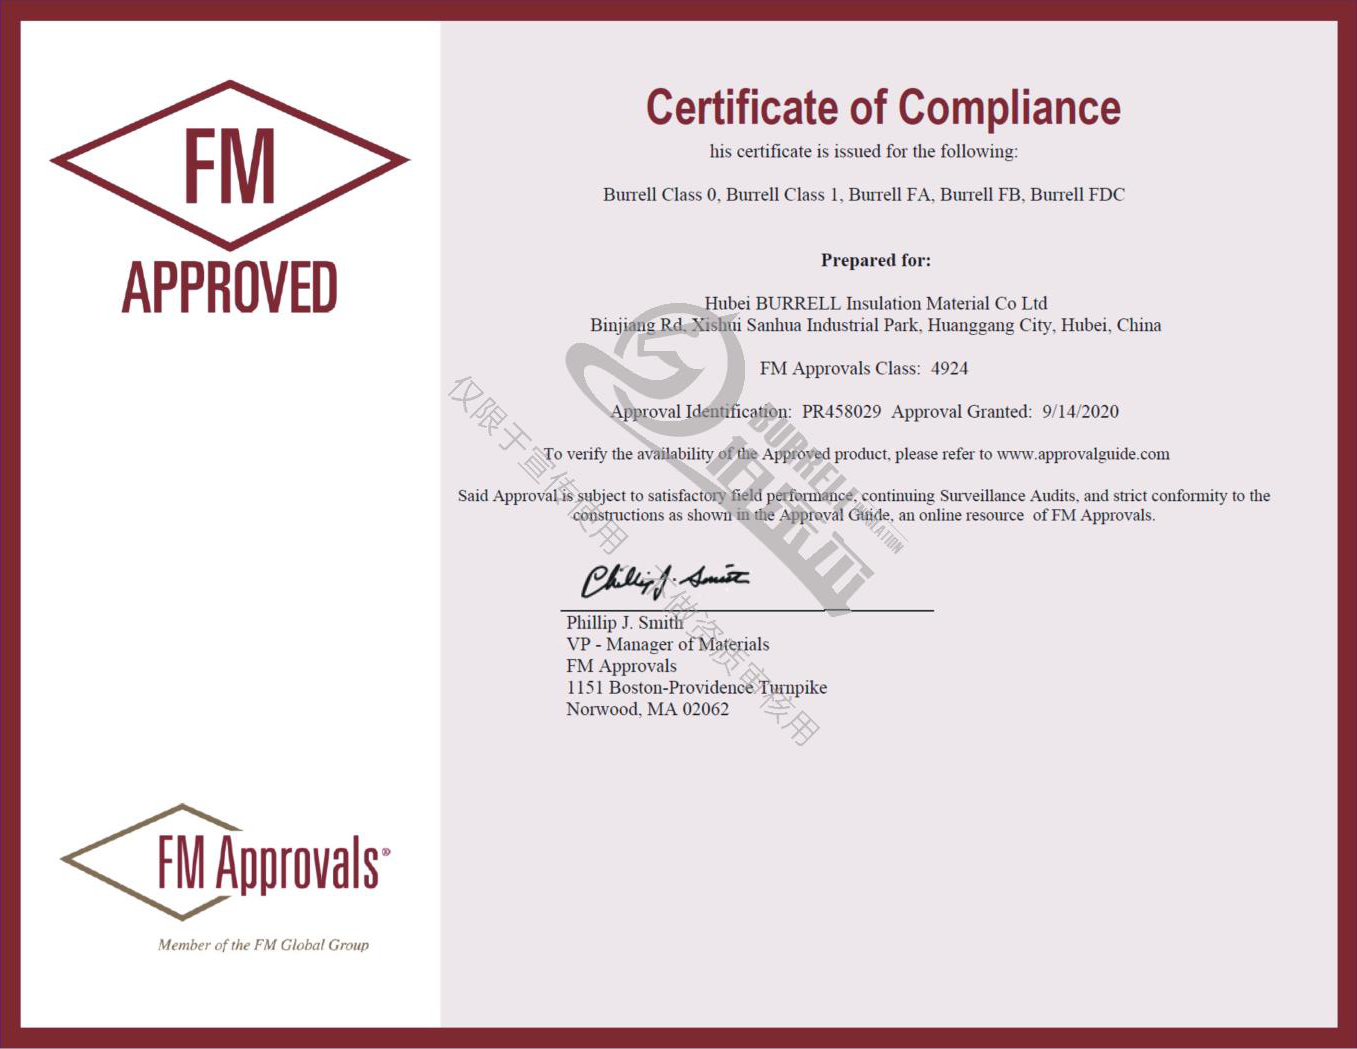 American FM certification certificate